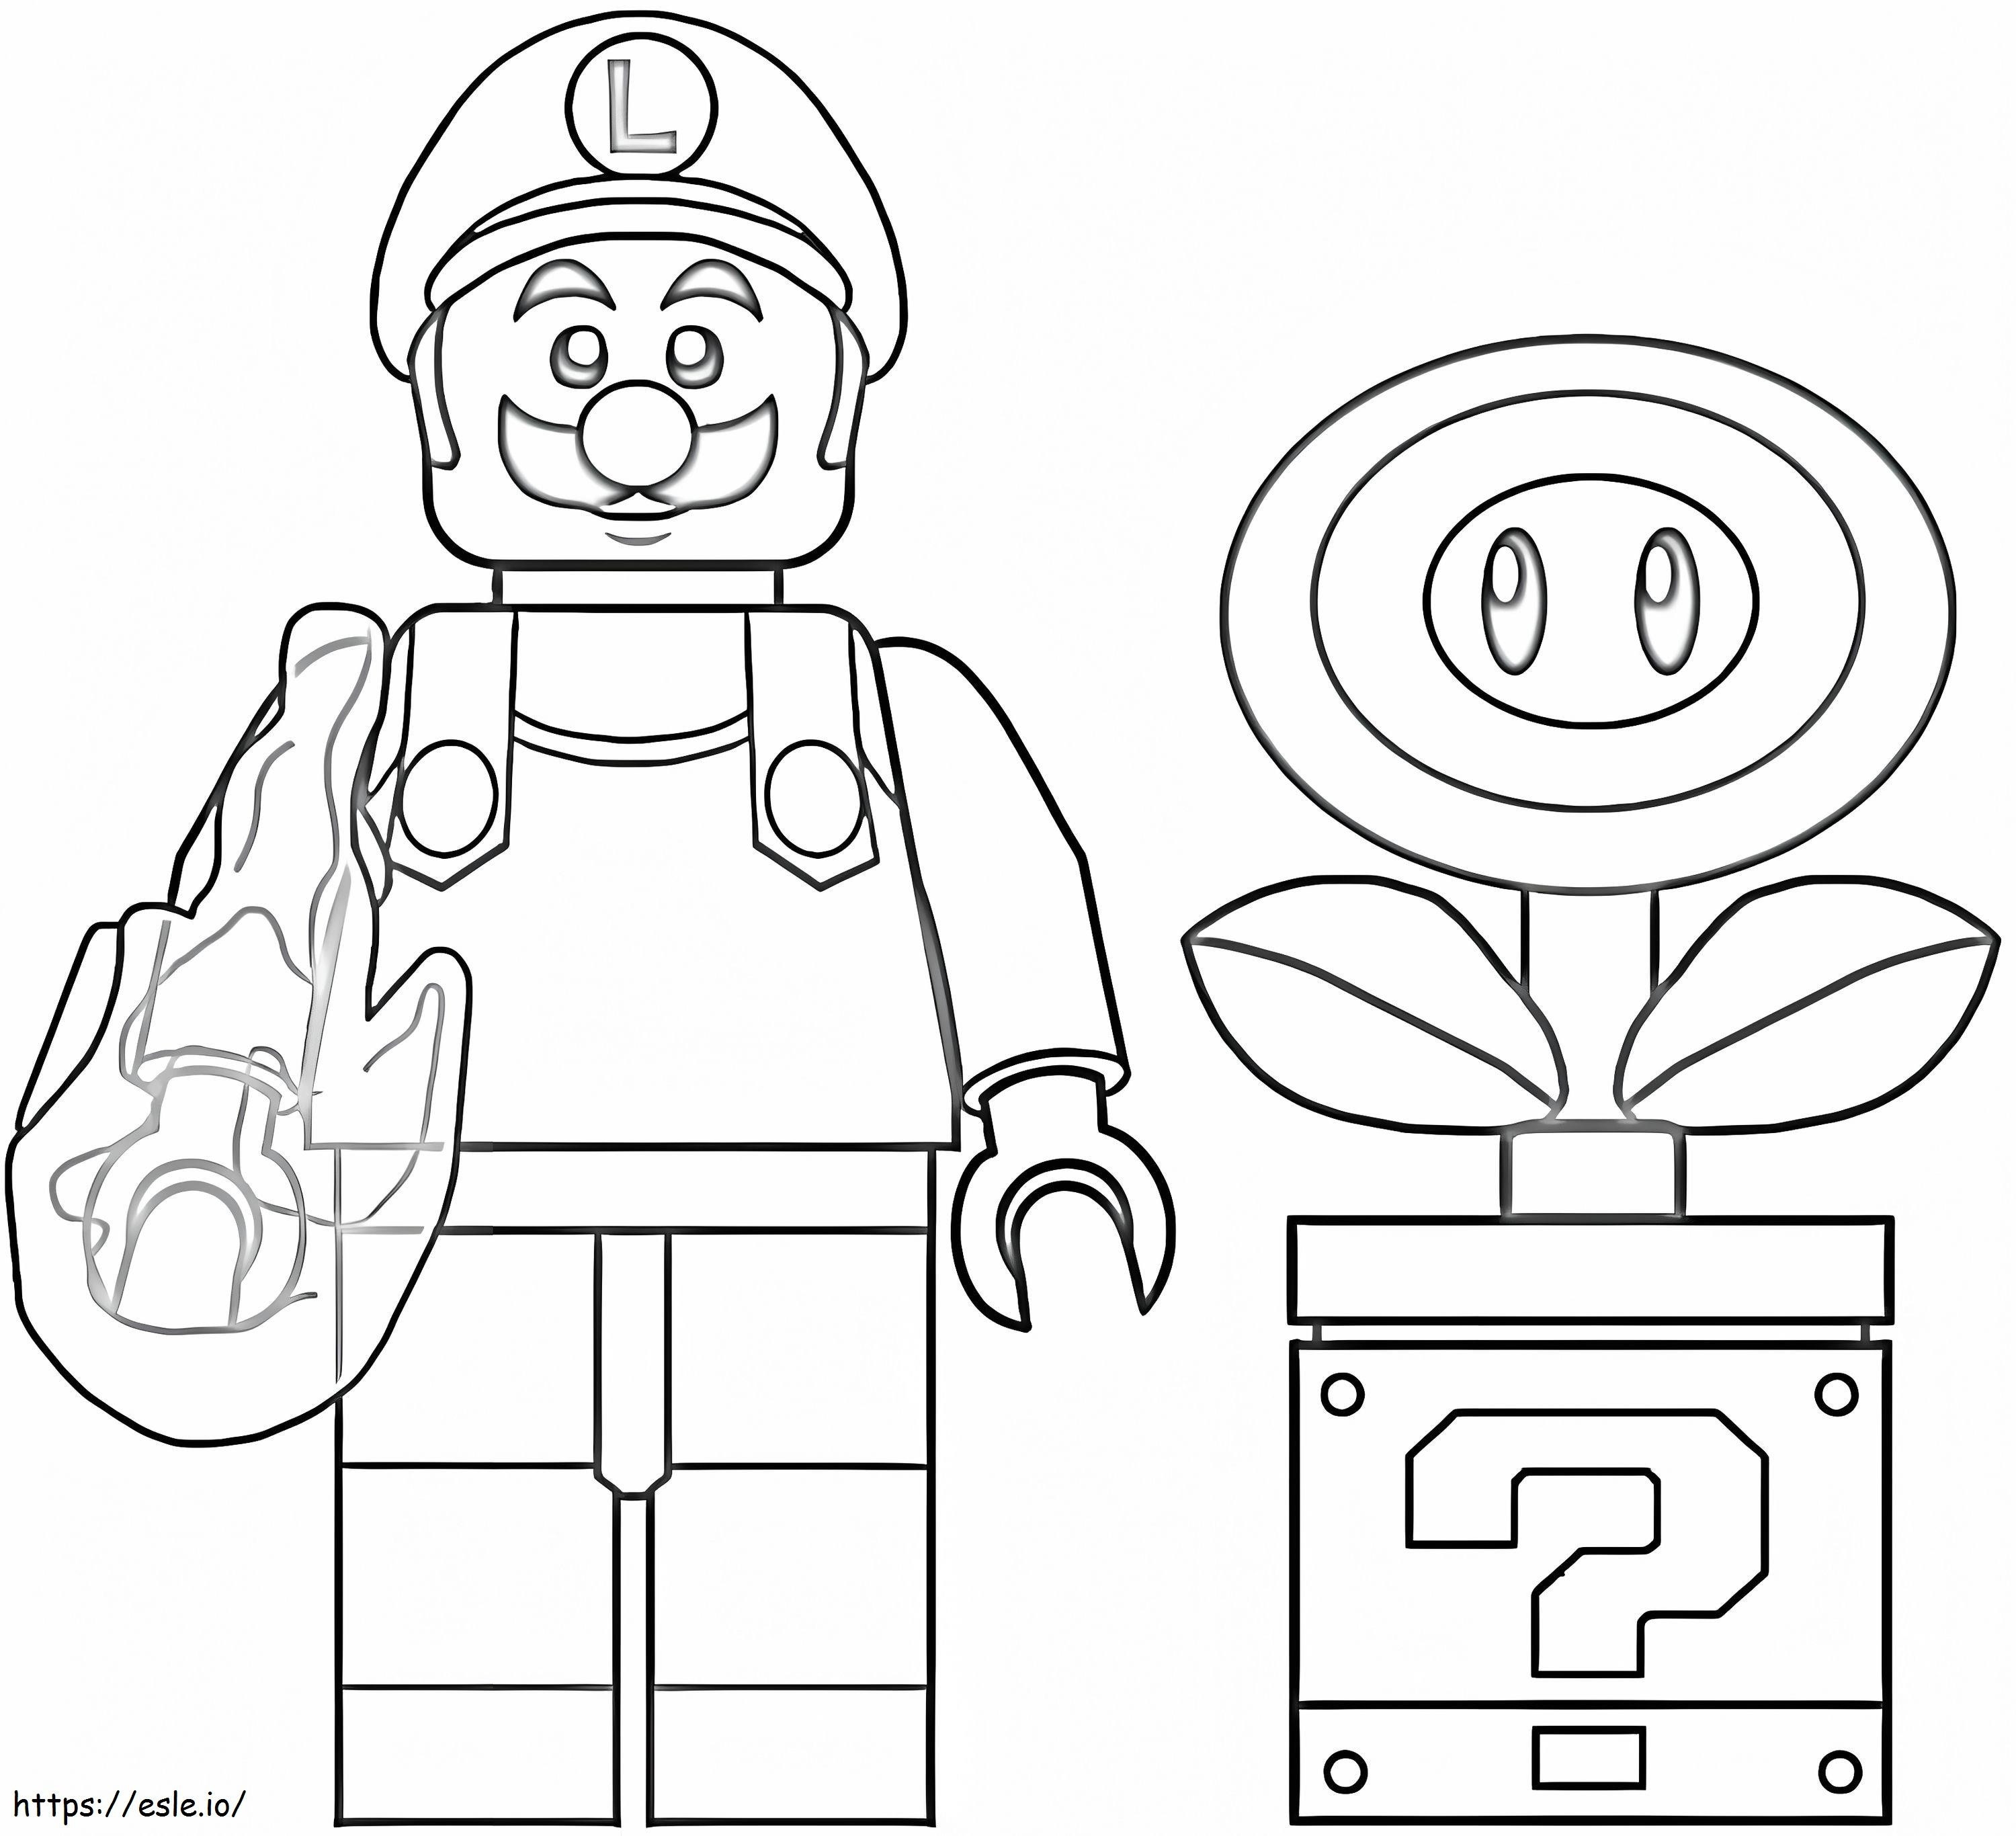 Lego Fire Luigi coloring page